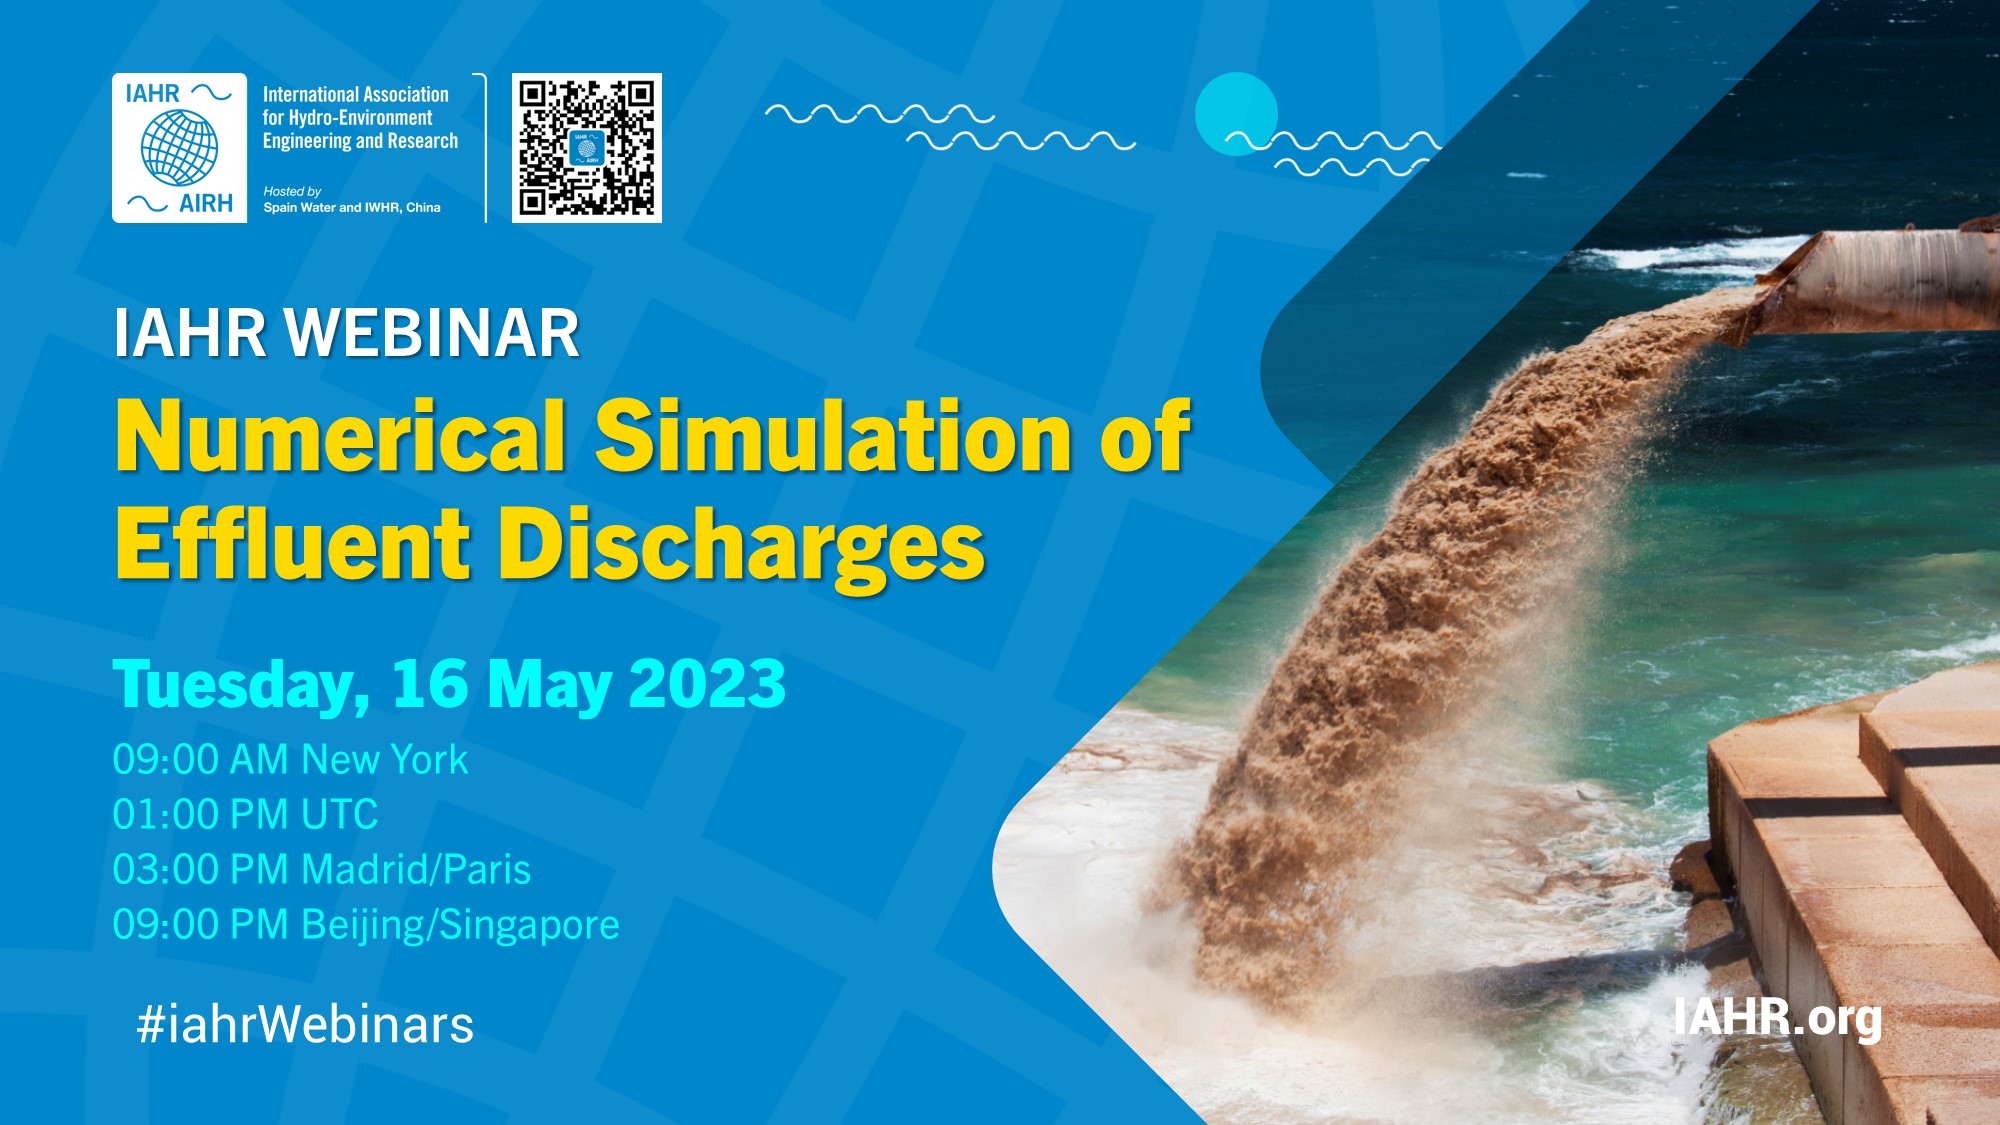 Numerical simulation of effluent discharges webinar